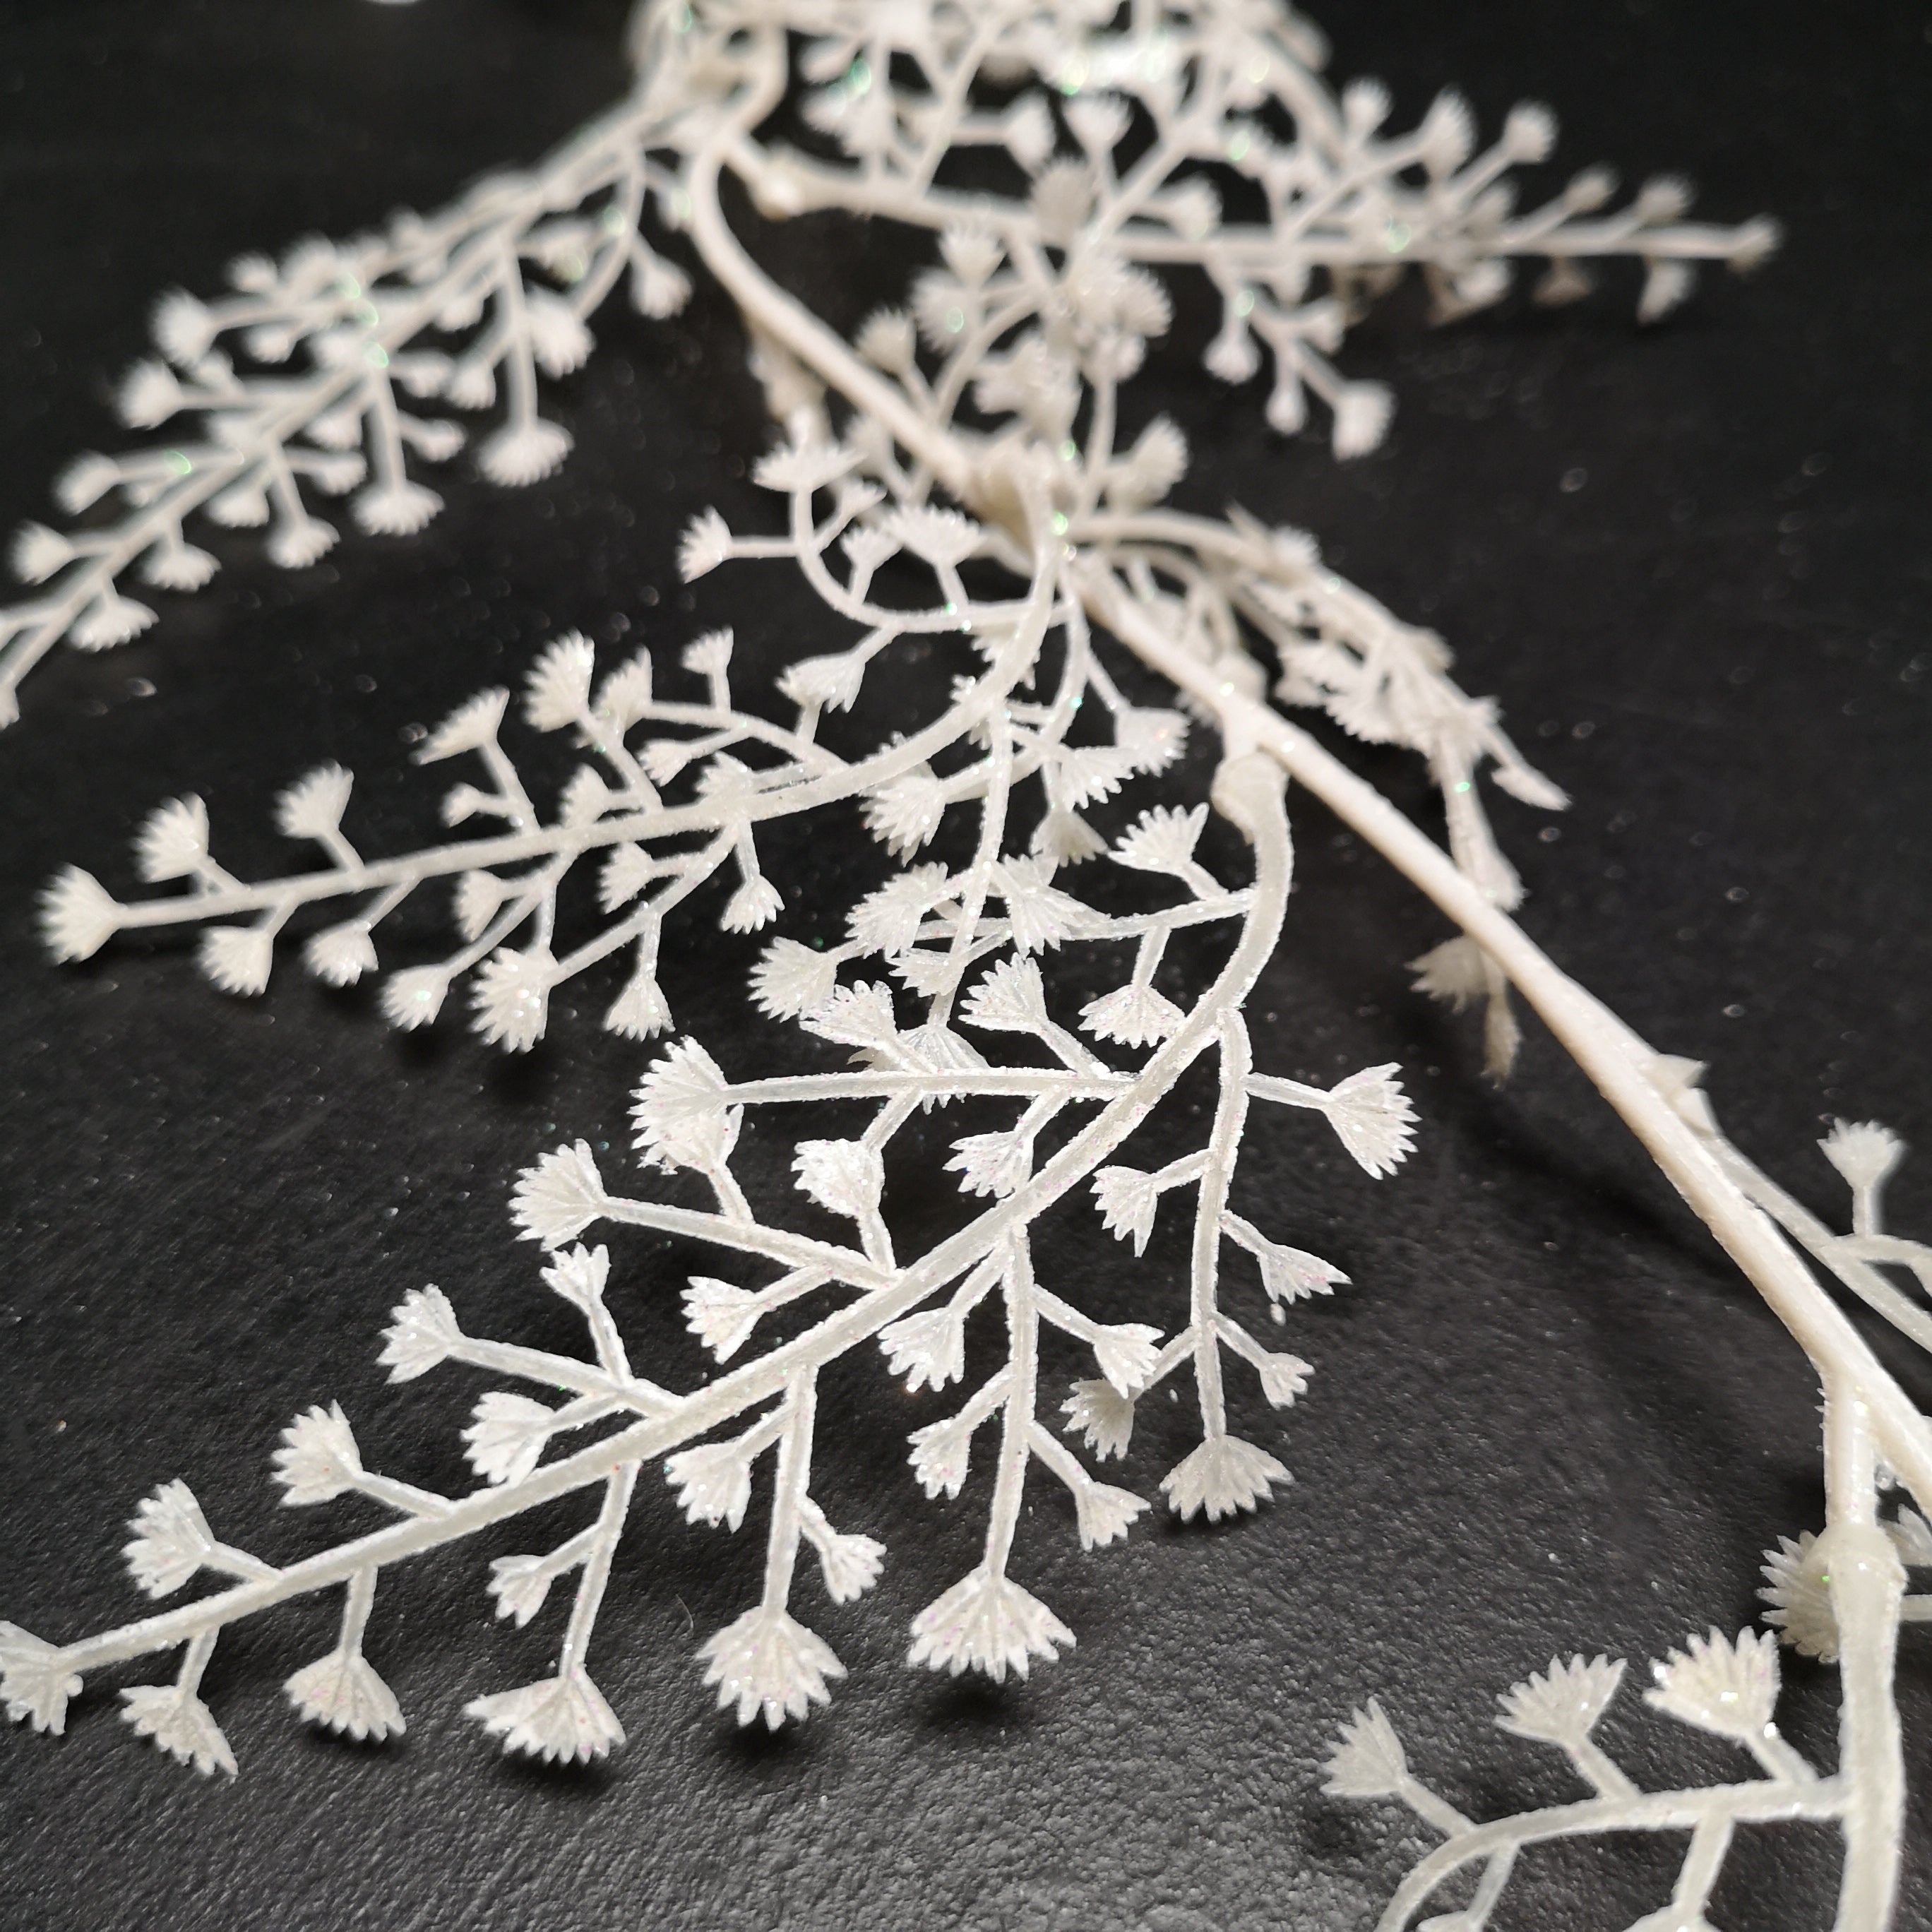 1.8m White Maidenhair Fern Glitter Garland Christmas Decoration